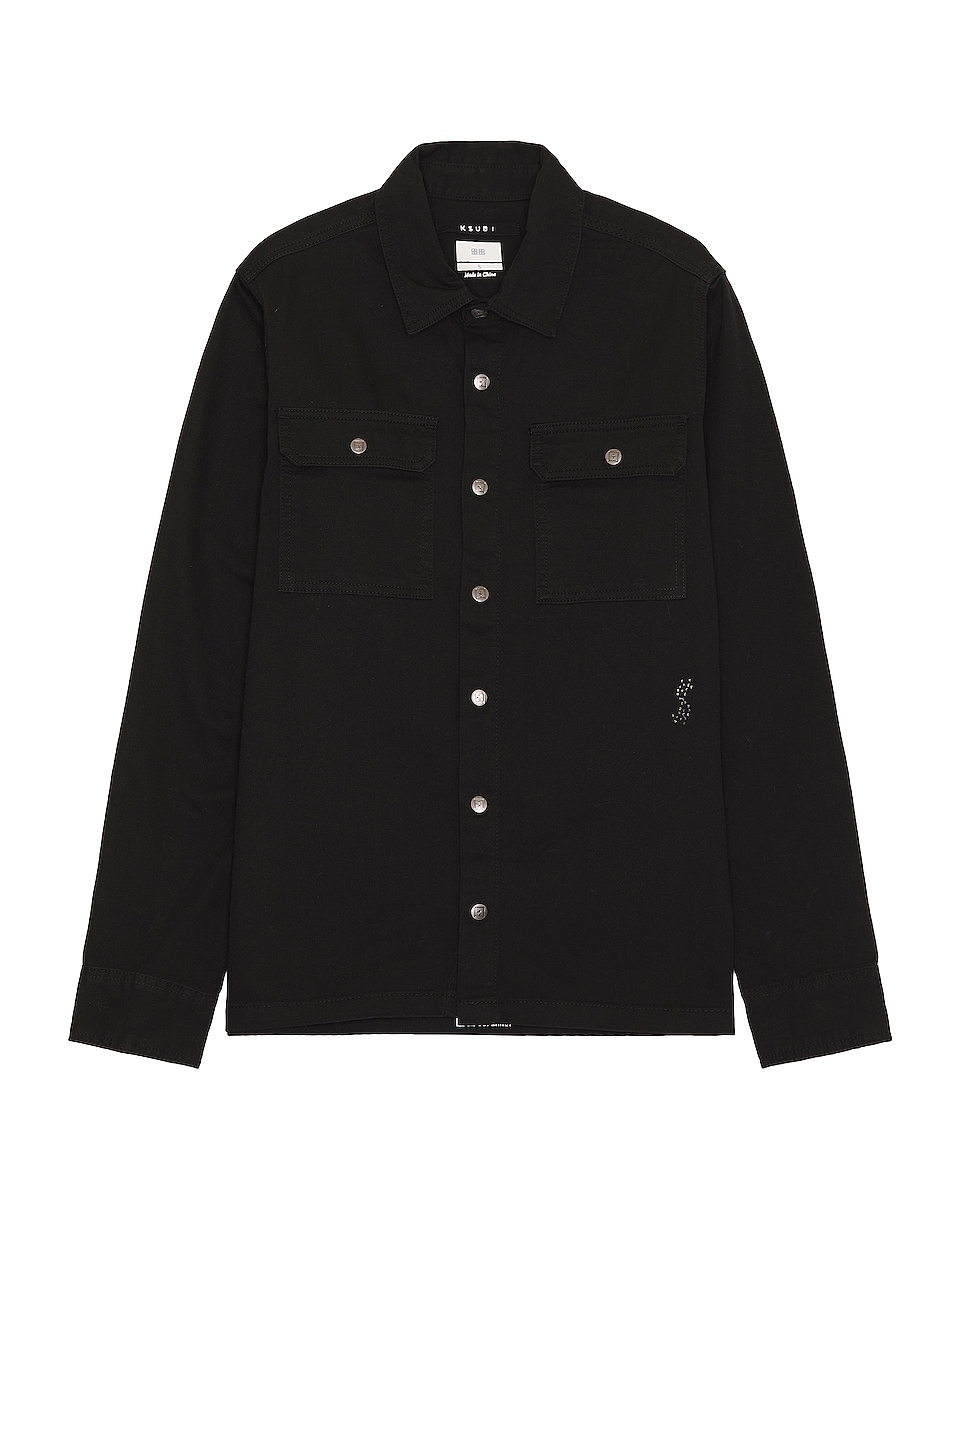 Ksubi Krystal Paradox Long Sleeve Shirt in Black | REVOLVE